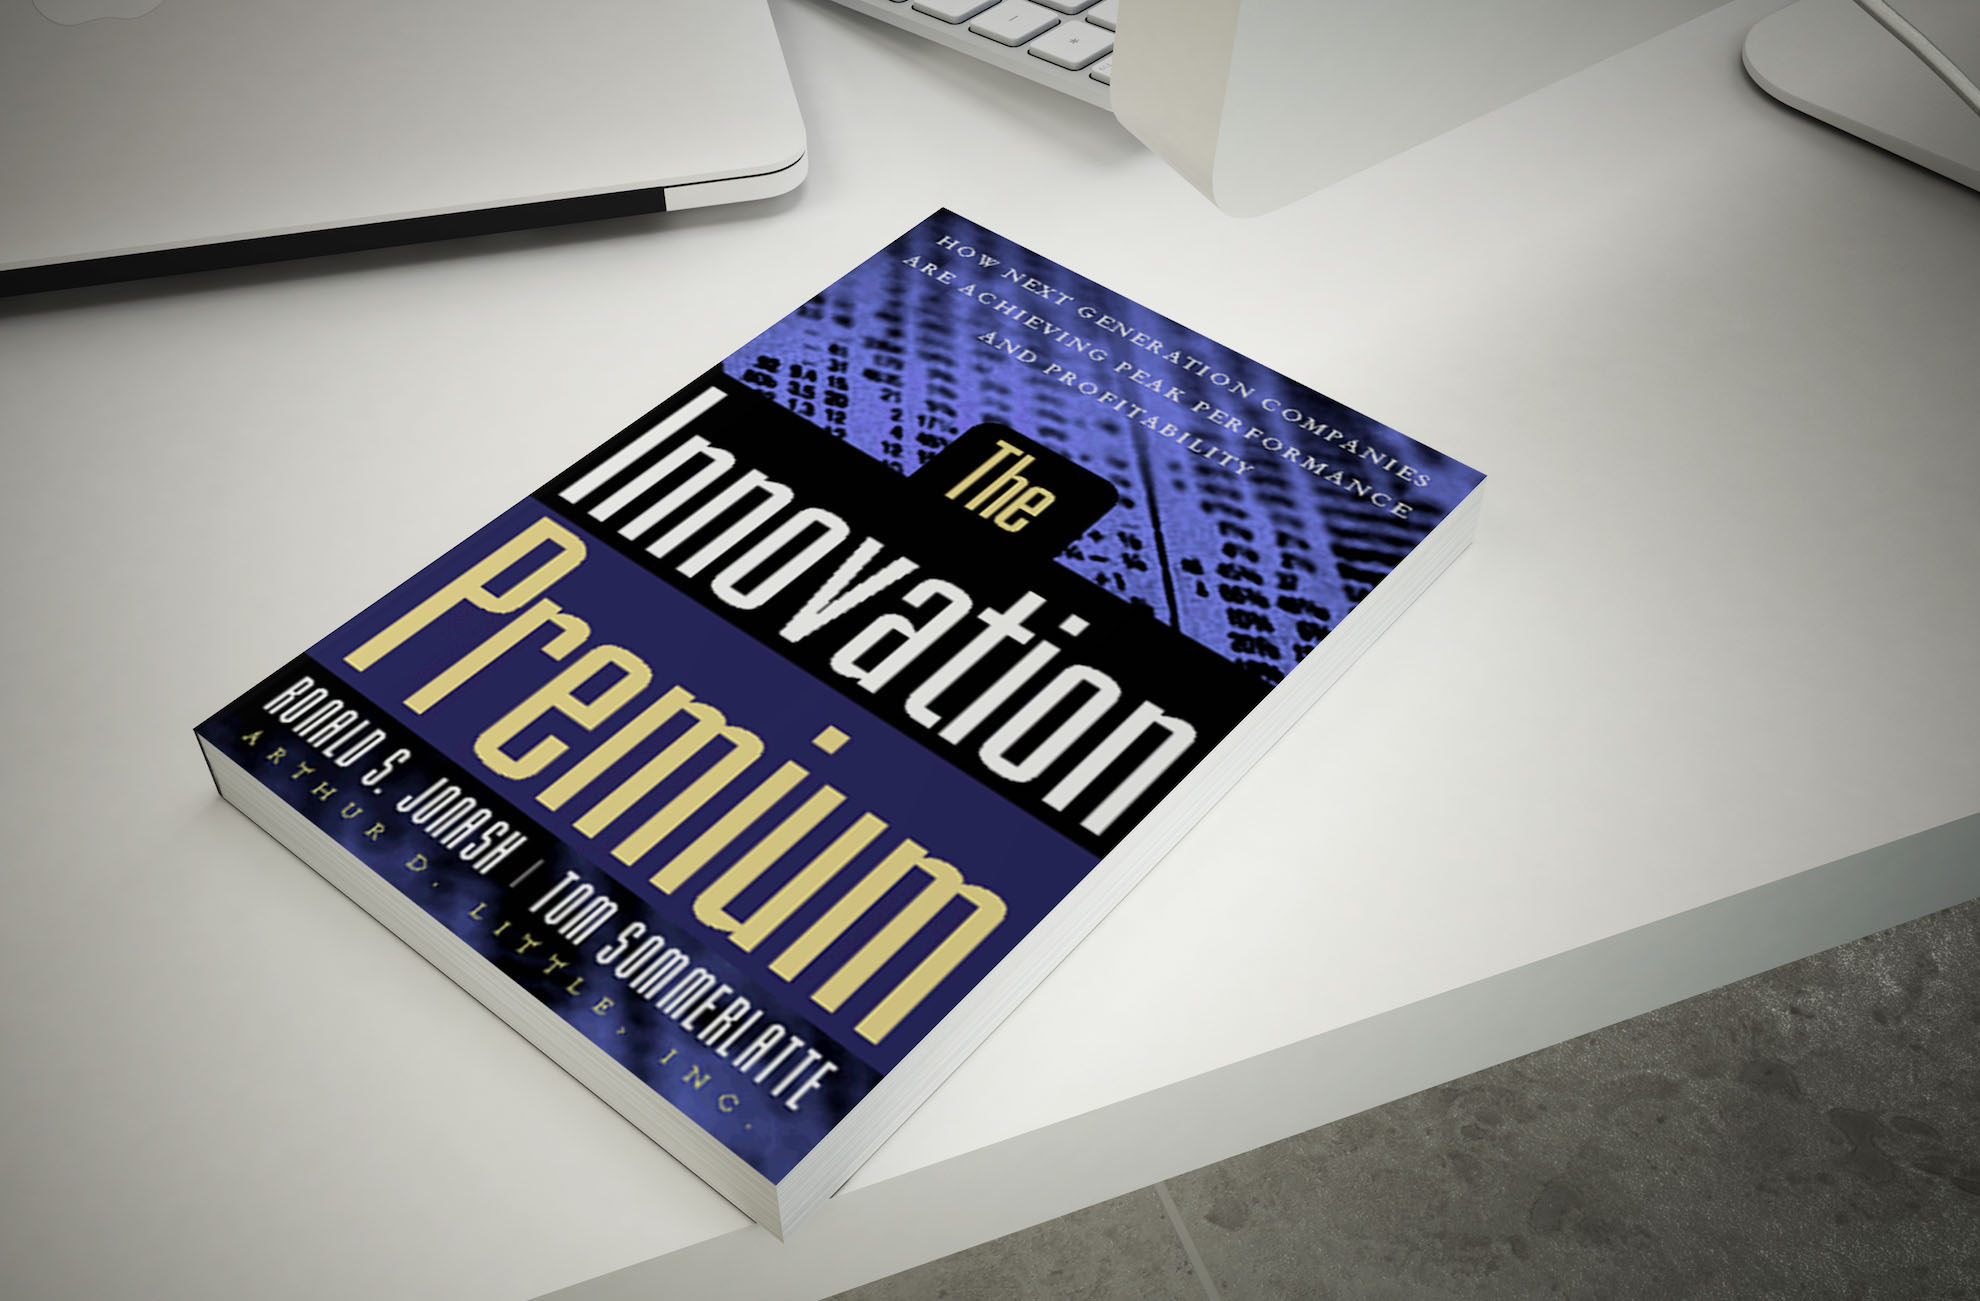 The Innovation Premium